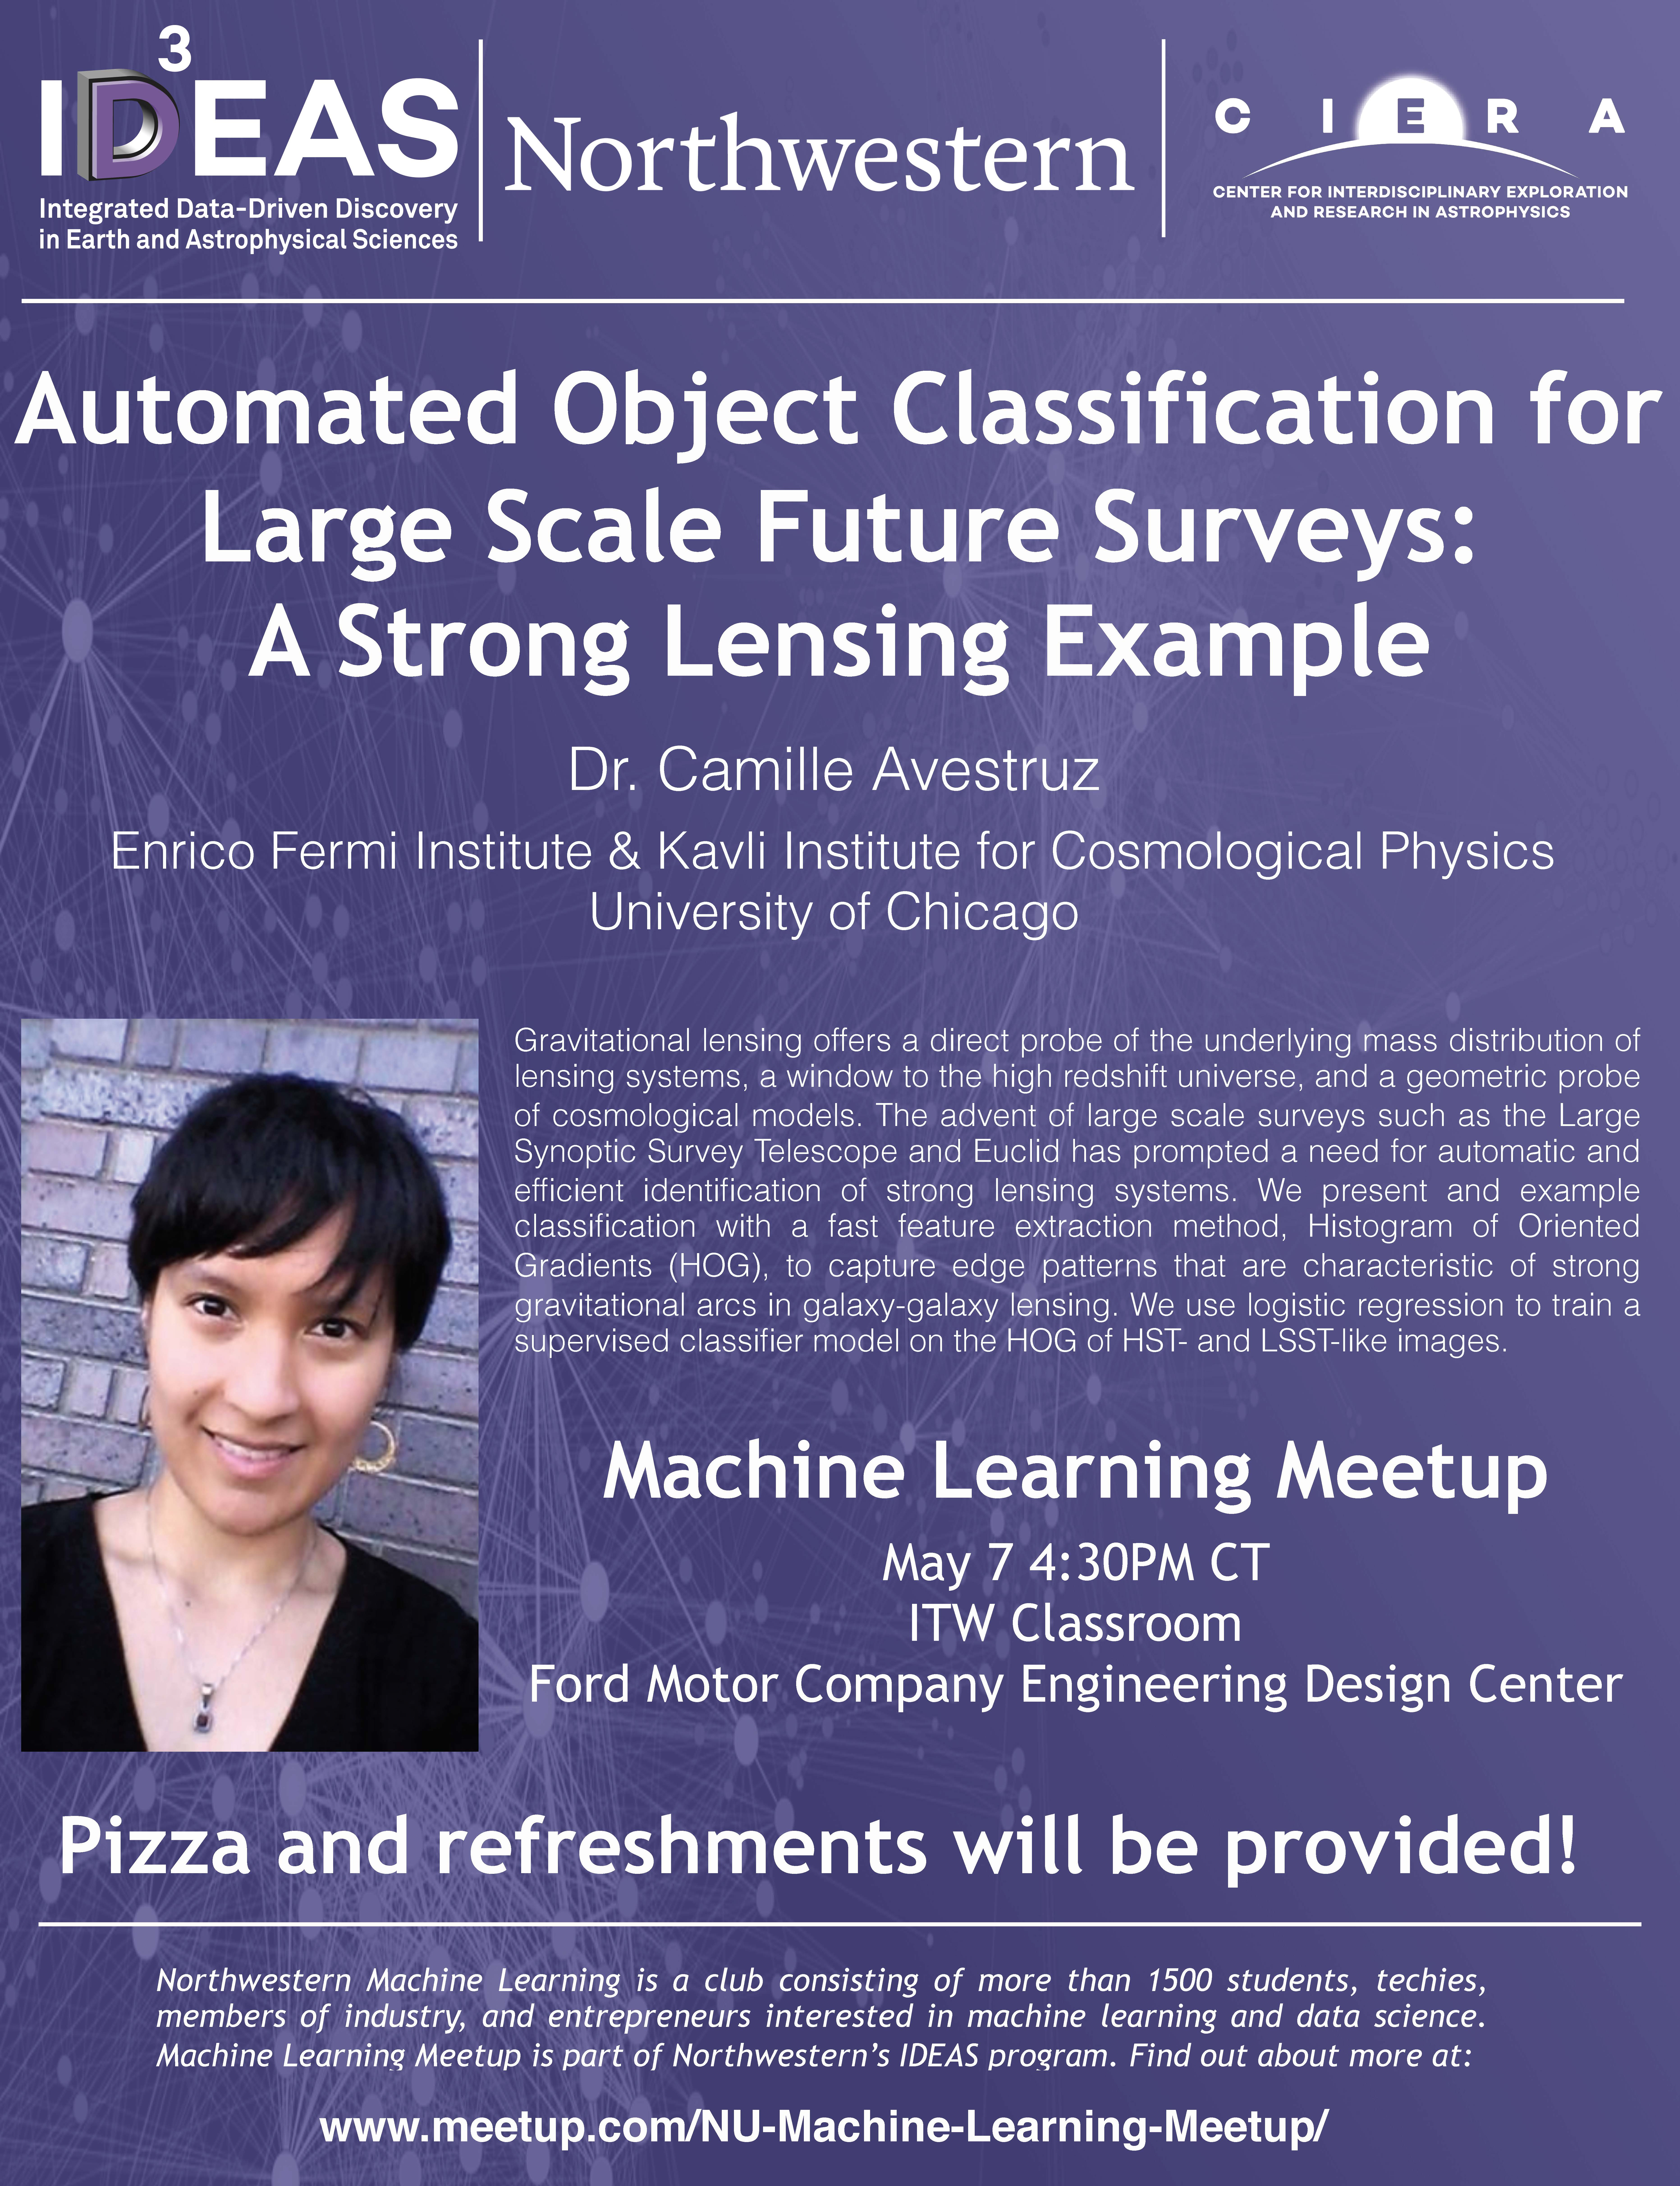 Spring Quarter Machine Learning Meet-Up: Camille Avestruz